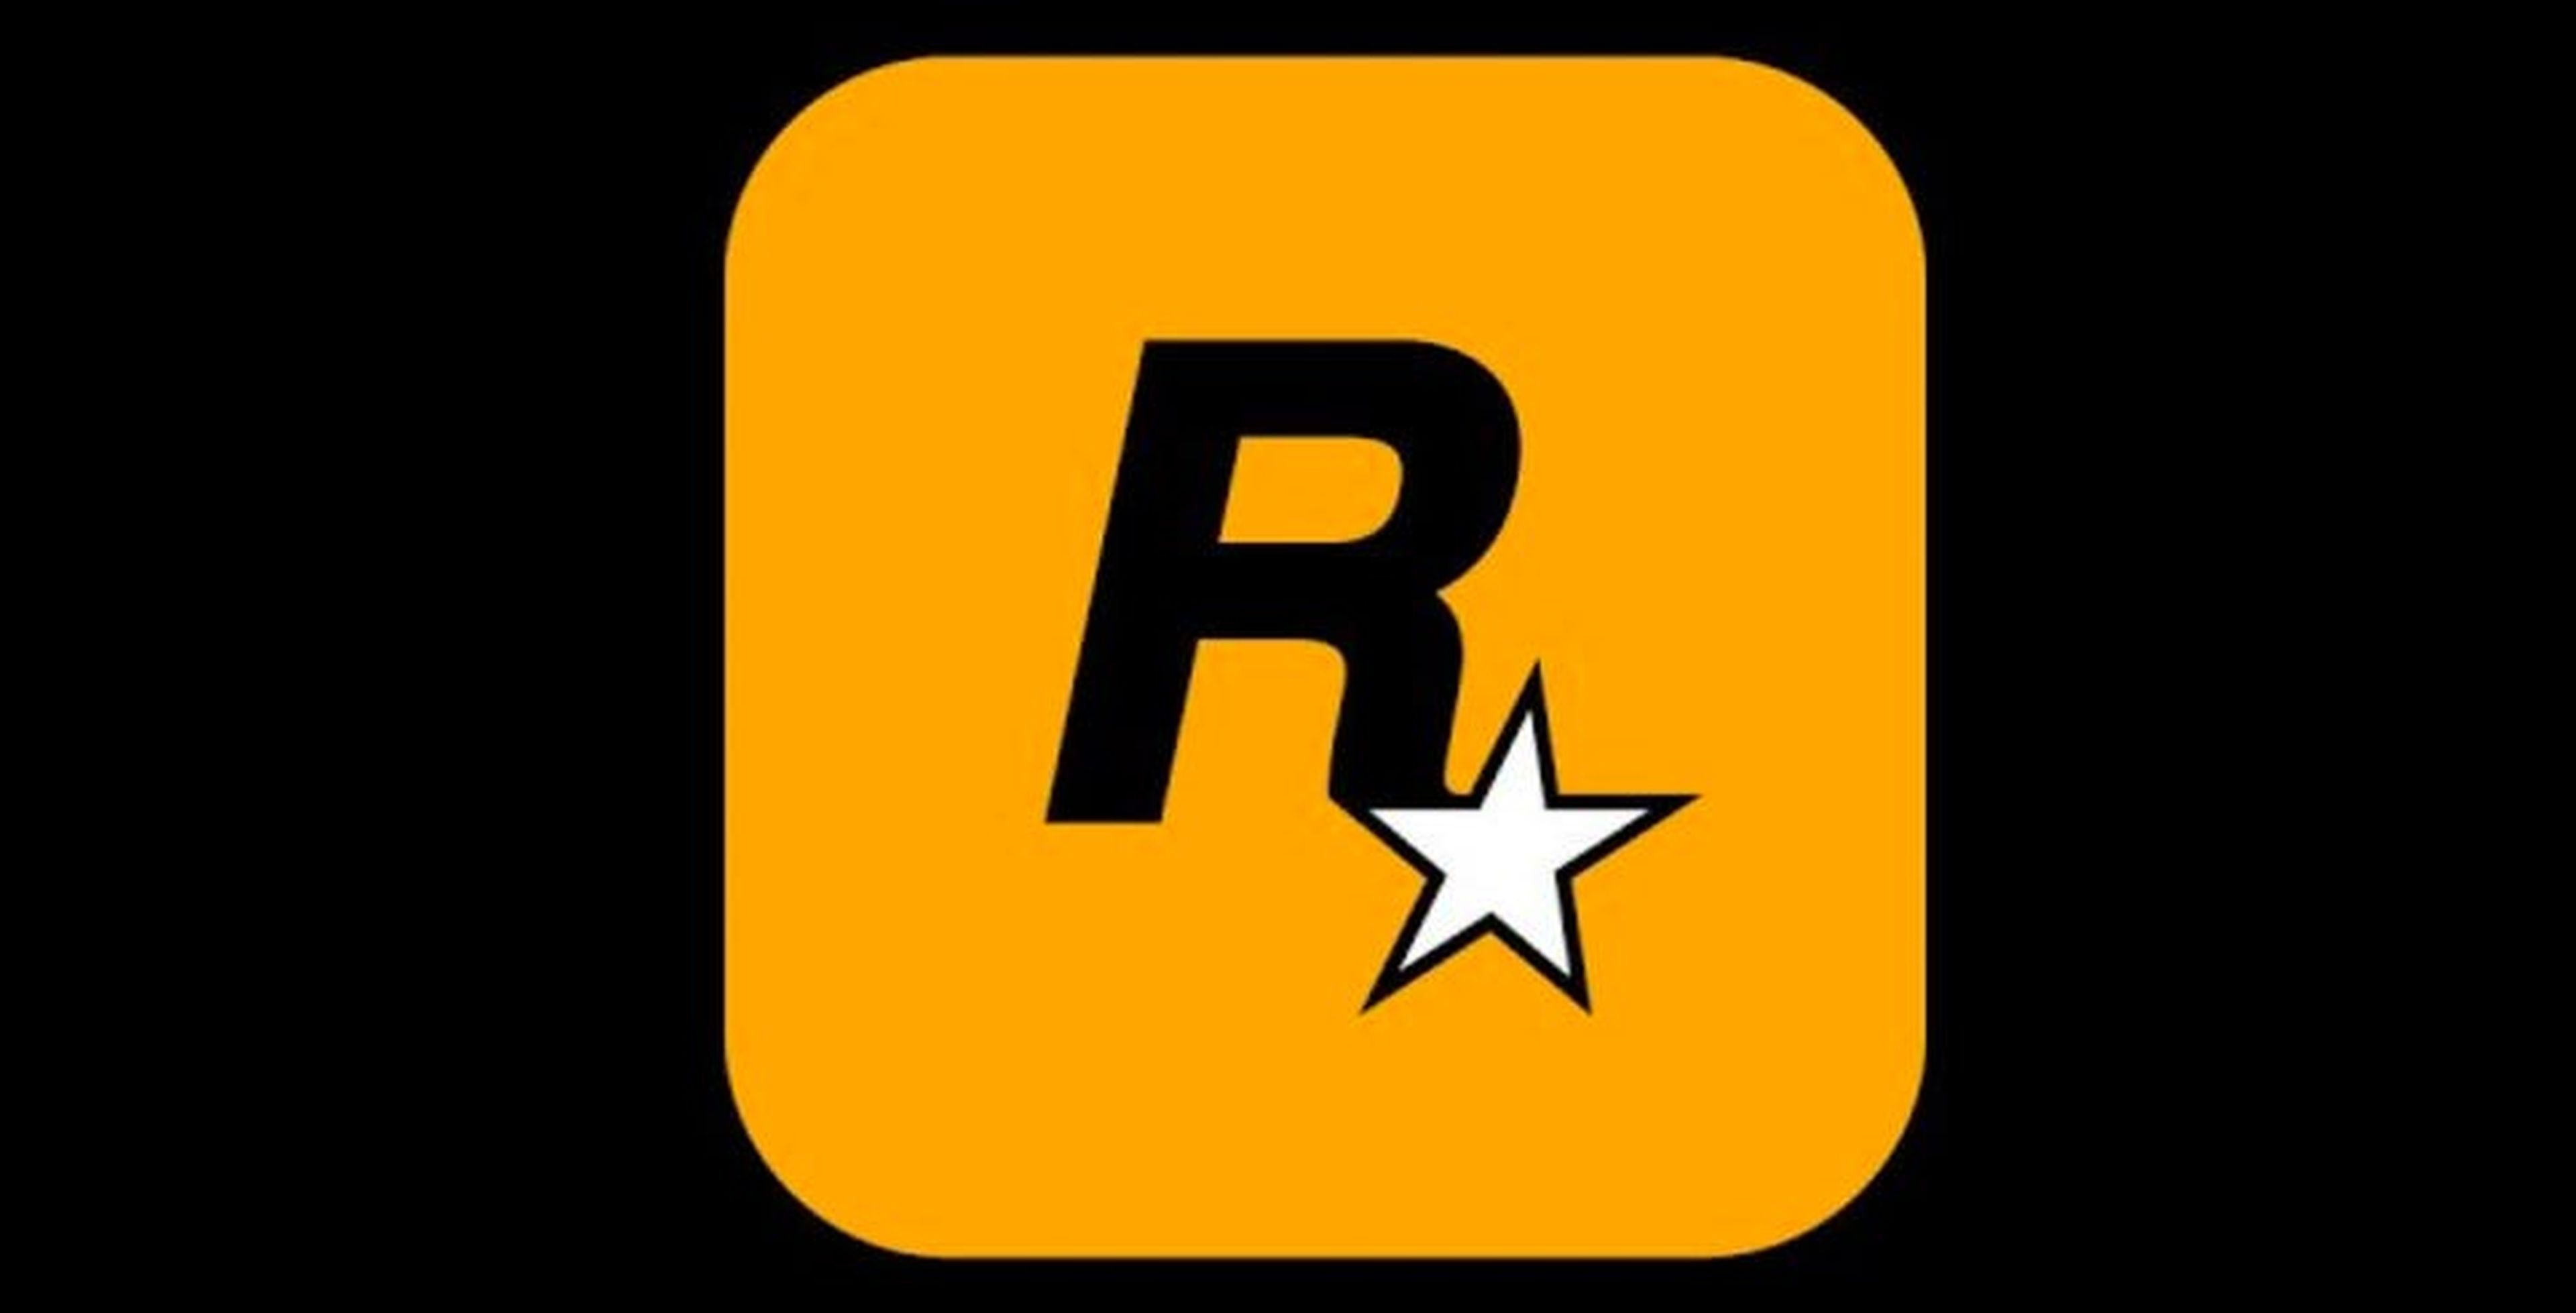 Лайк э рокстар. Рокстар. Рокстар геймс. Rockstar games logo. Офис Rockstar games.